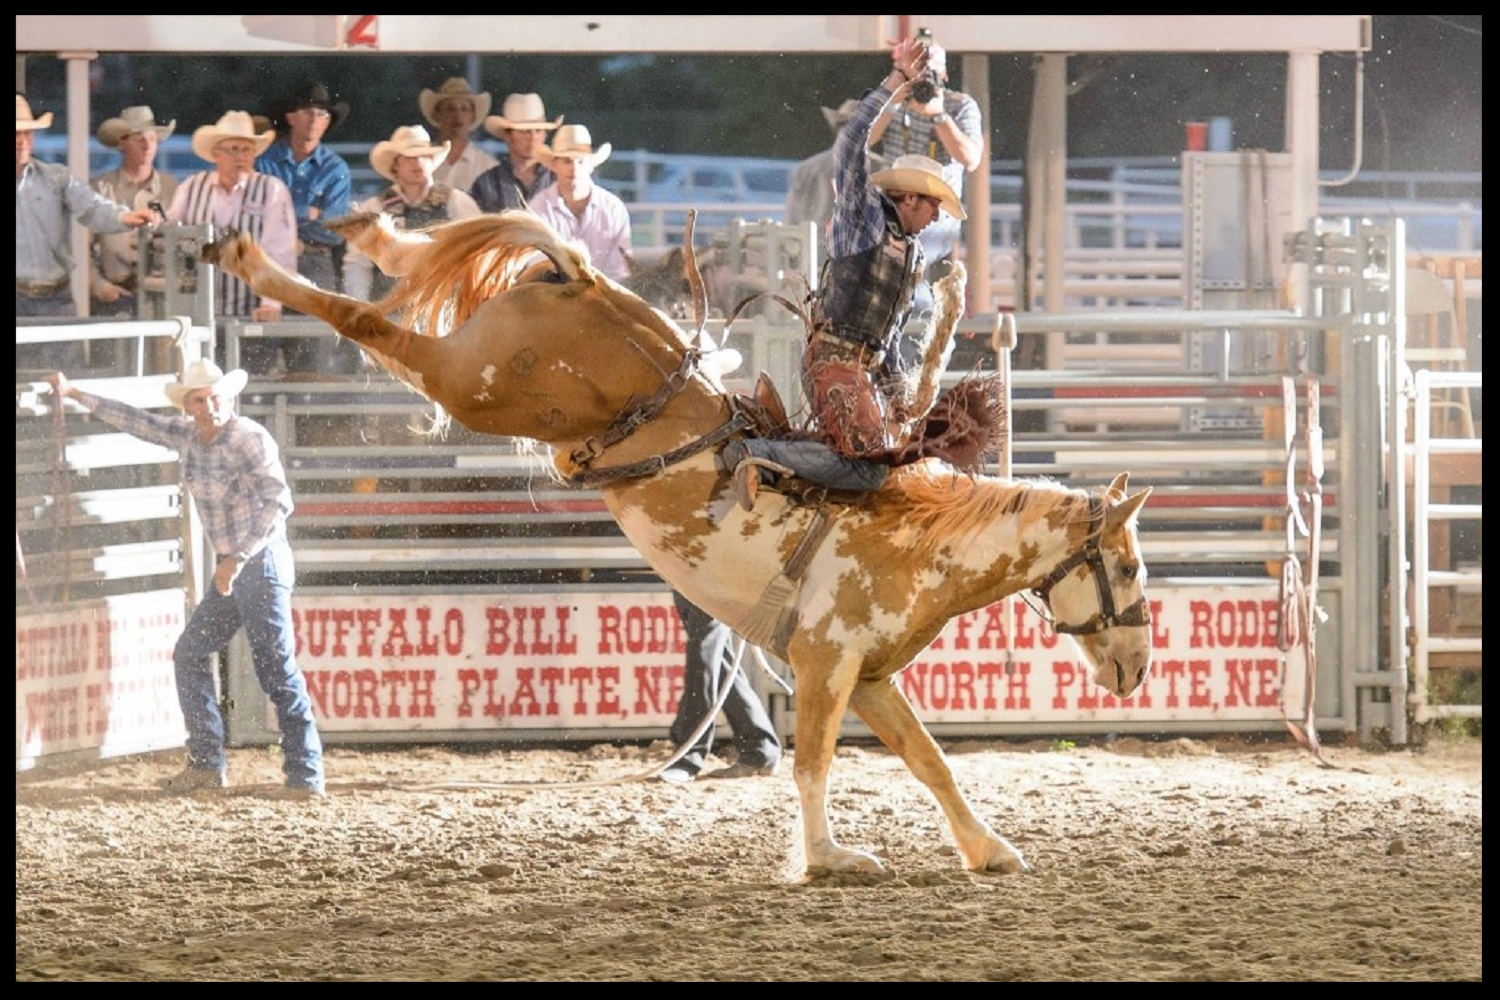 Buffalo Bill Rodeo (North Platte, NE)